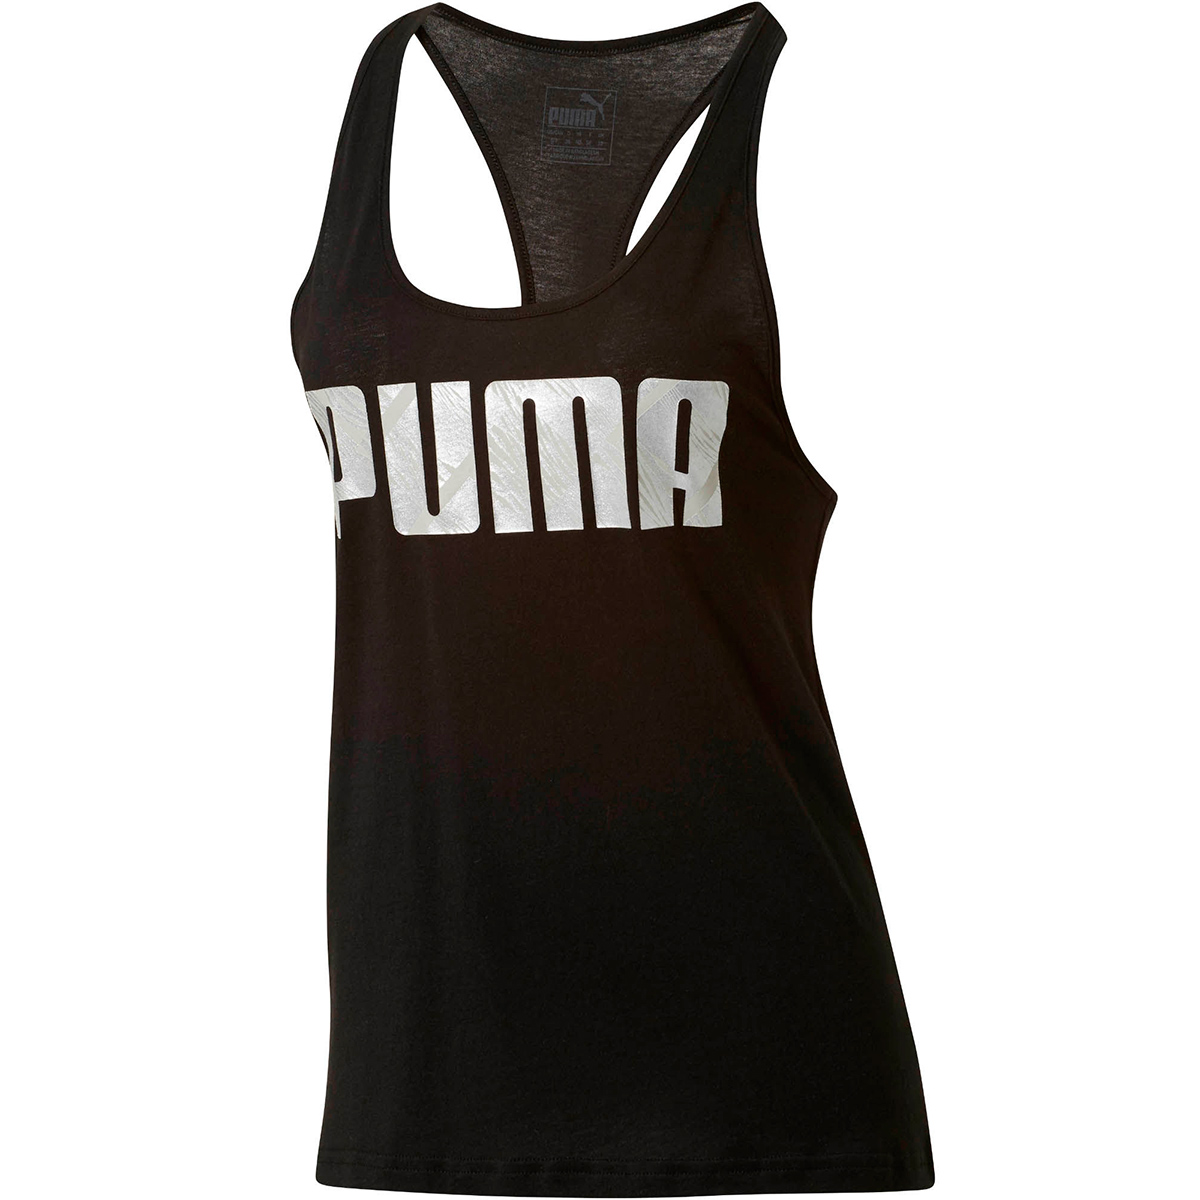 Puma Women's Summer Tank Top - Black, M